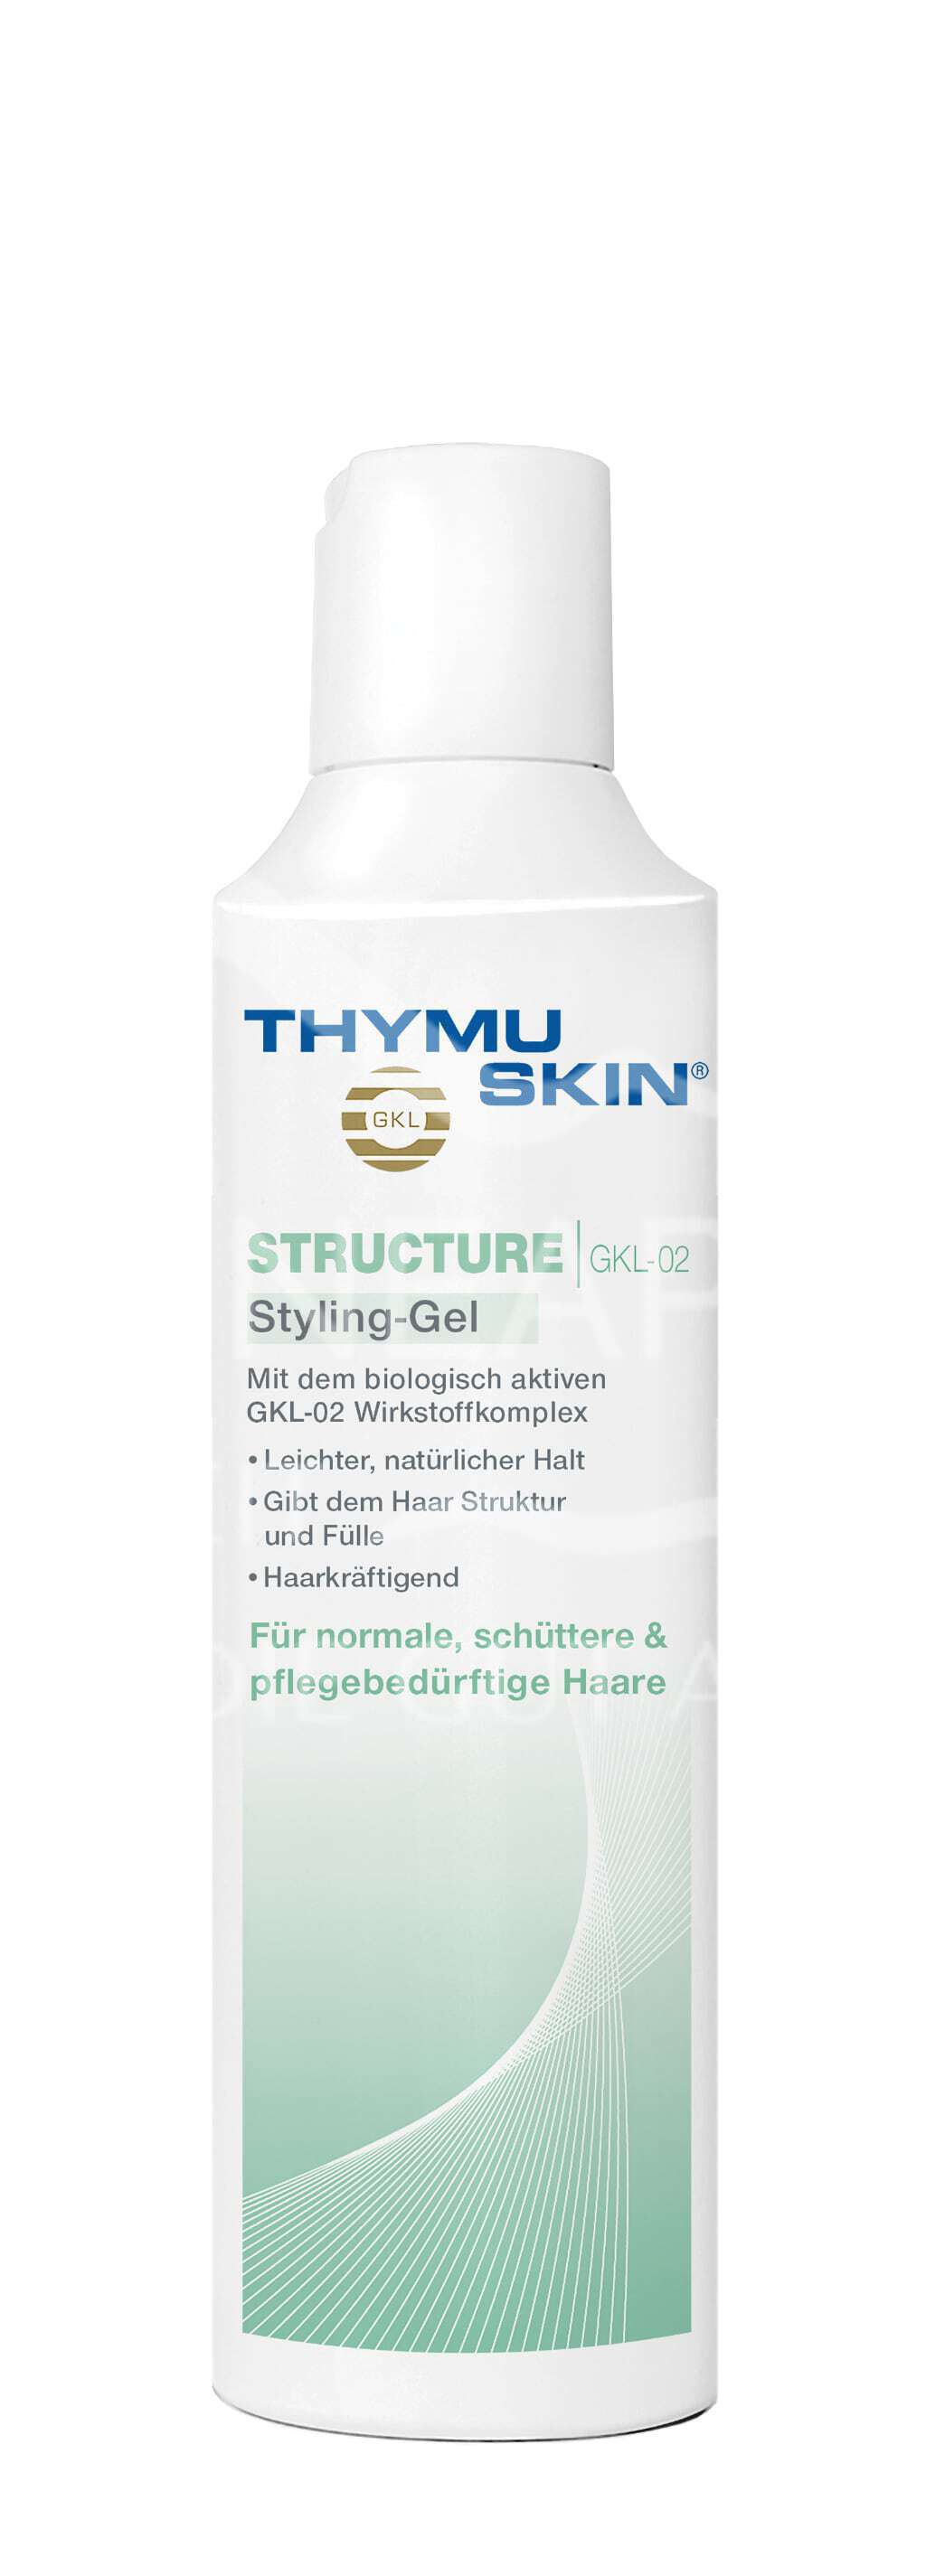 Thymuskin Structure Styling-Gel